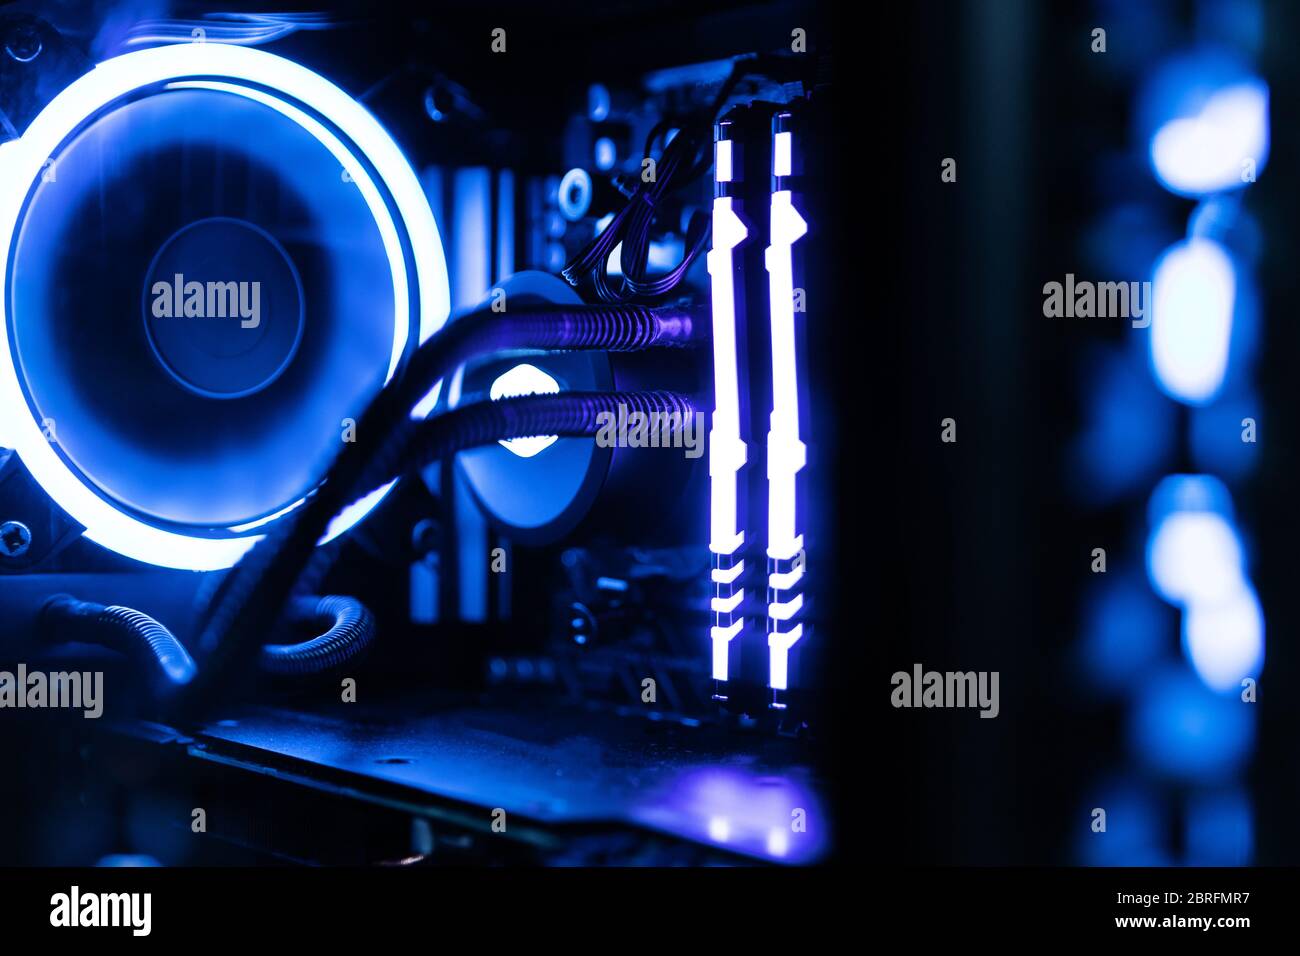 desktop computer case with rgb led lighting Stock Photo